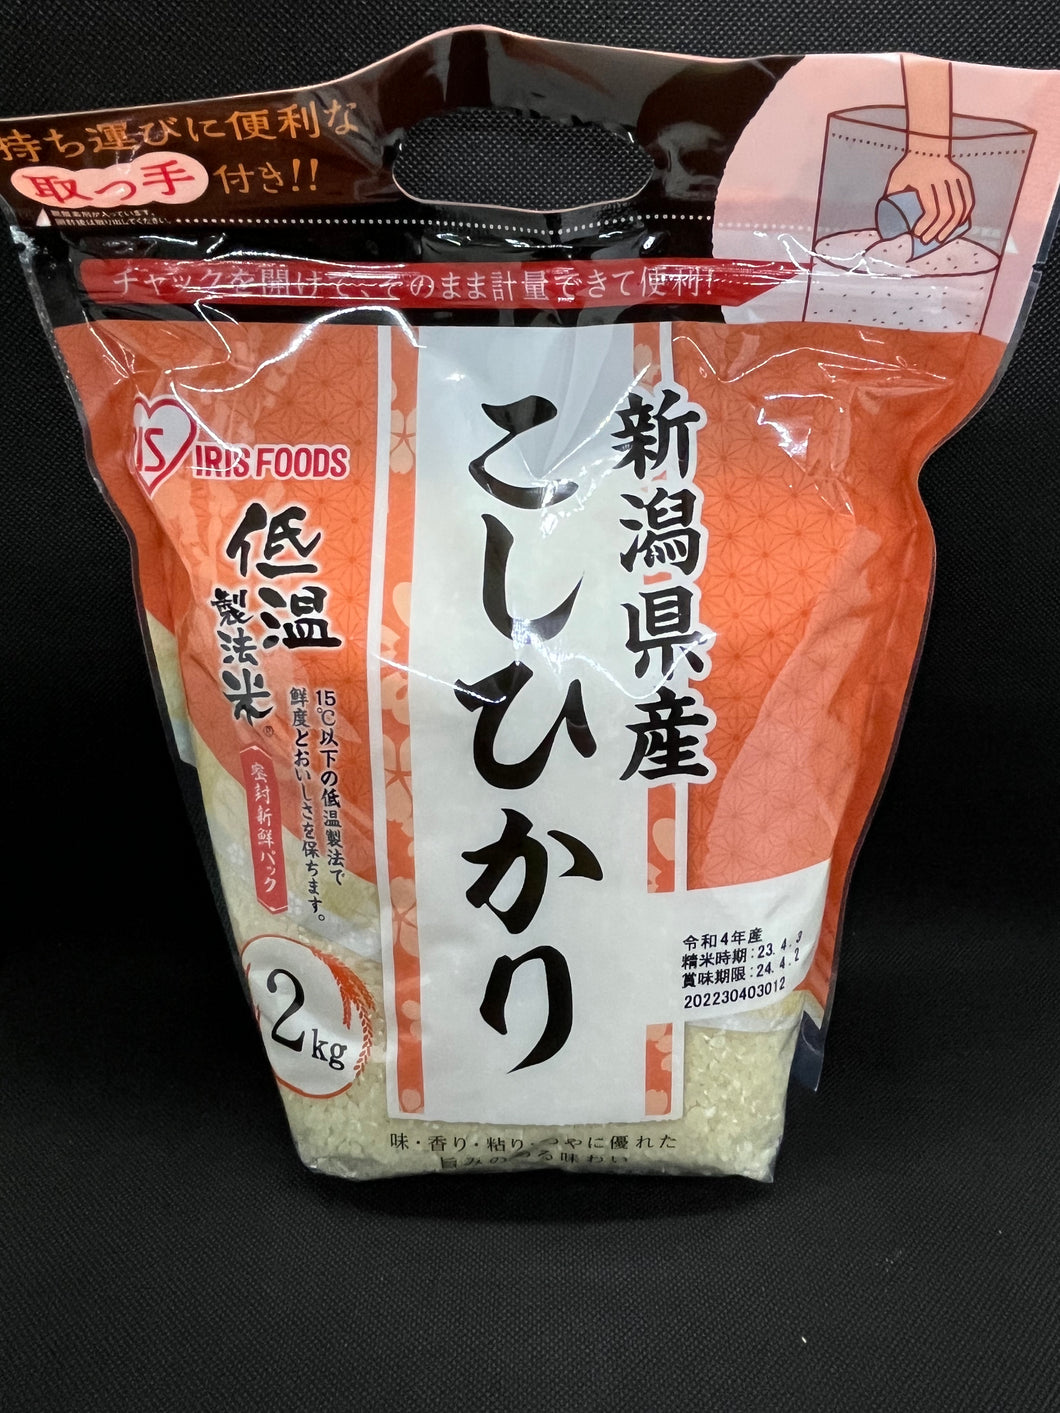 Iris Foods こしひかり (2Kg)